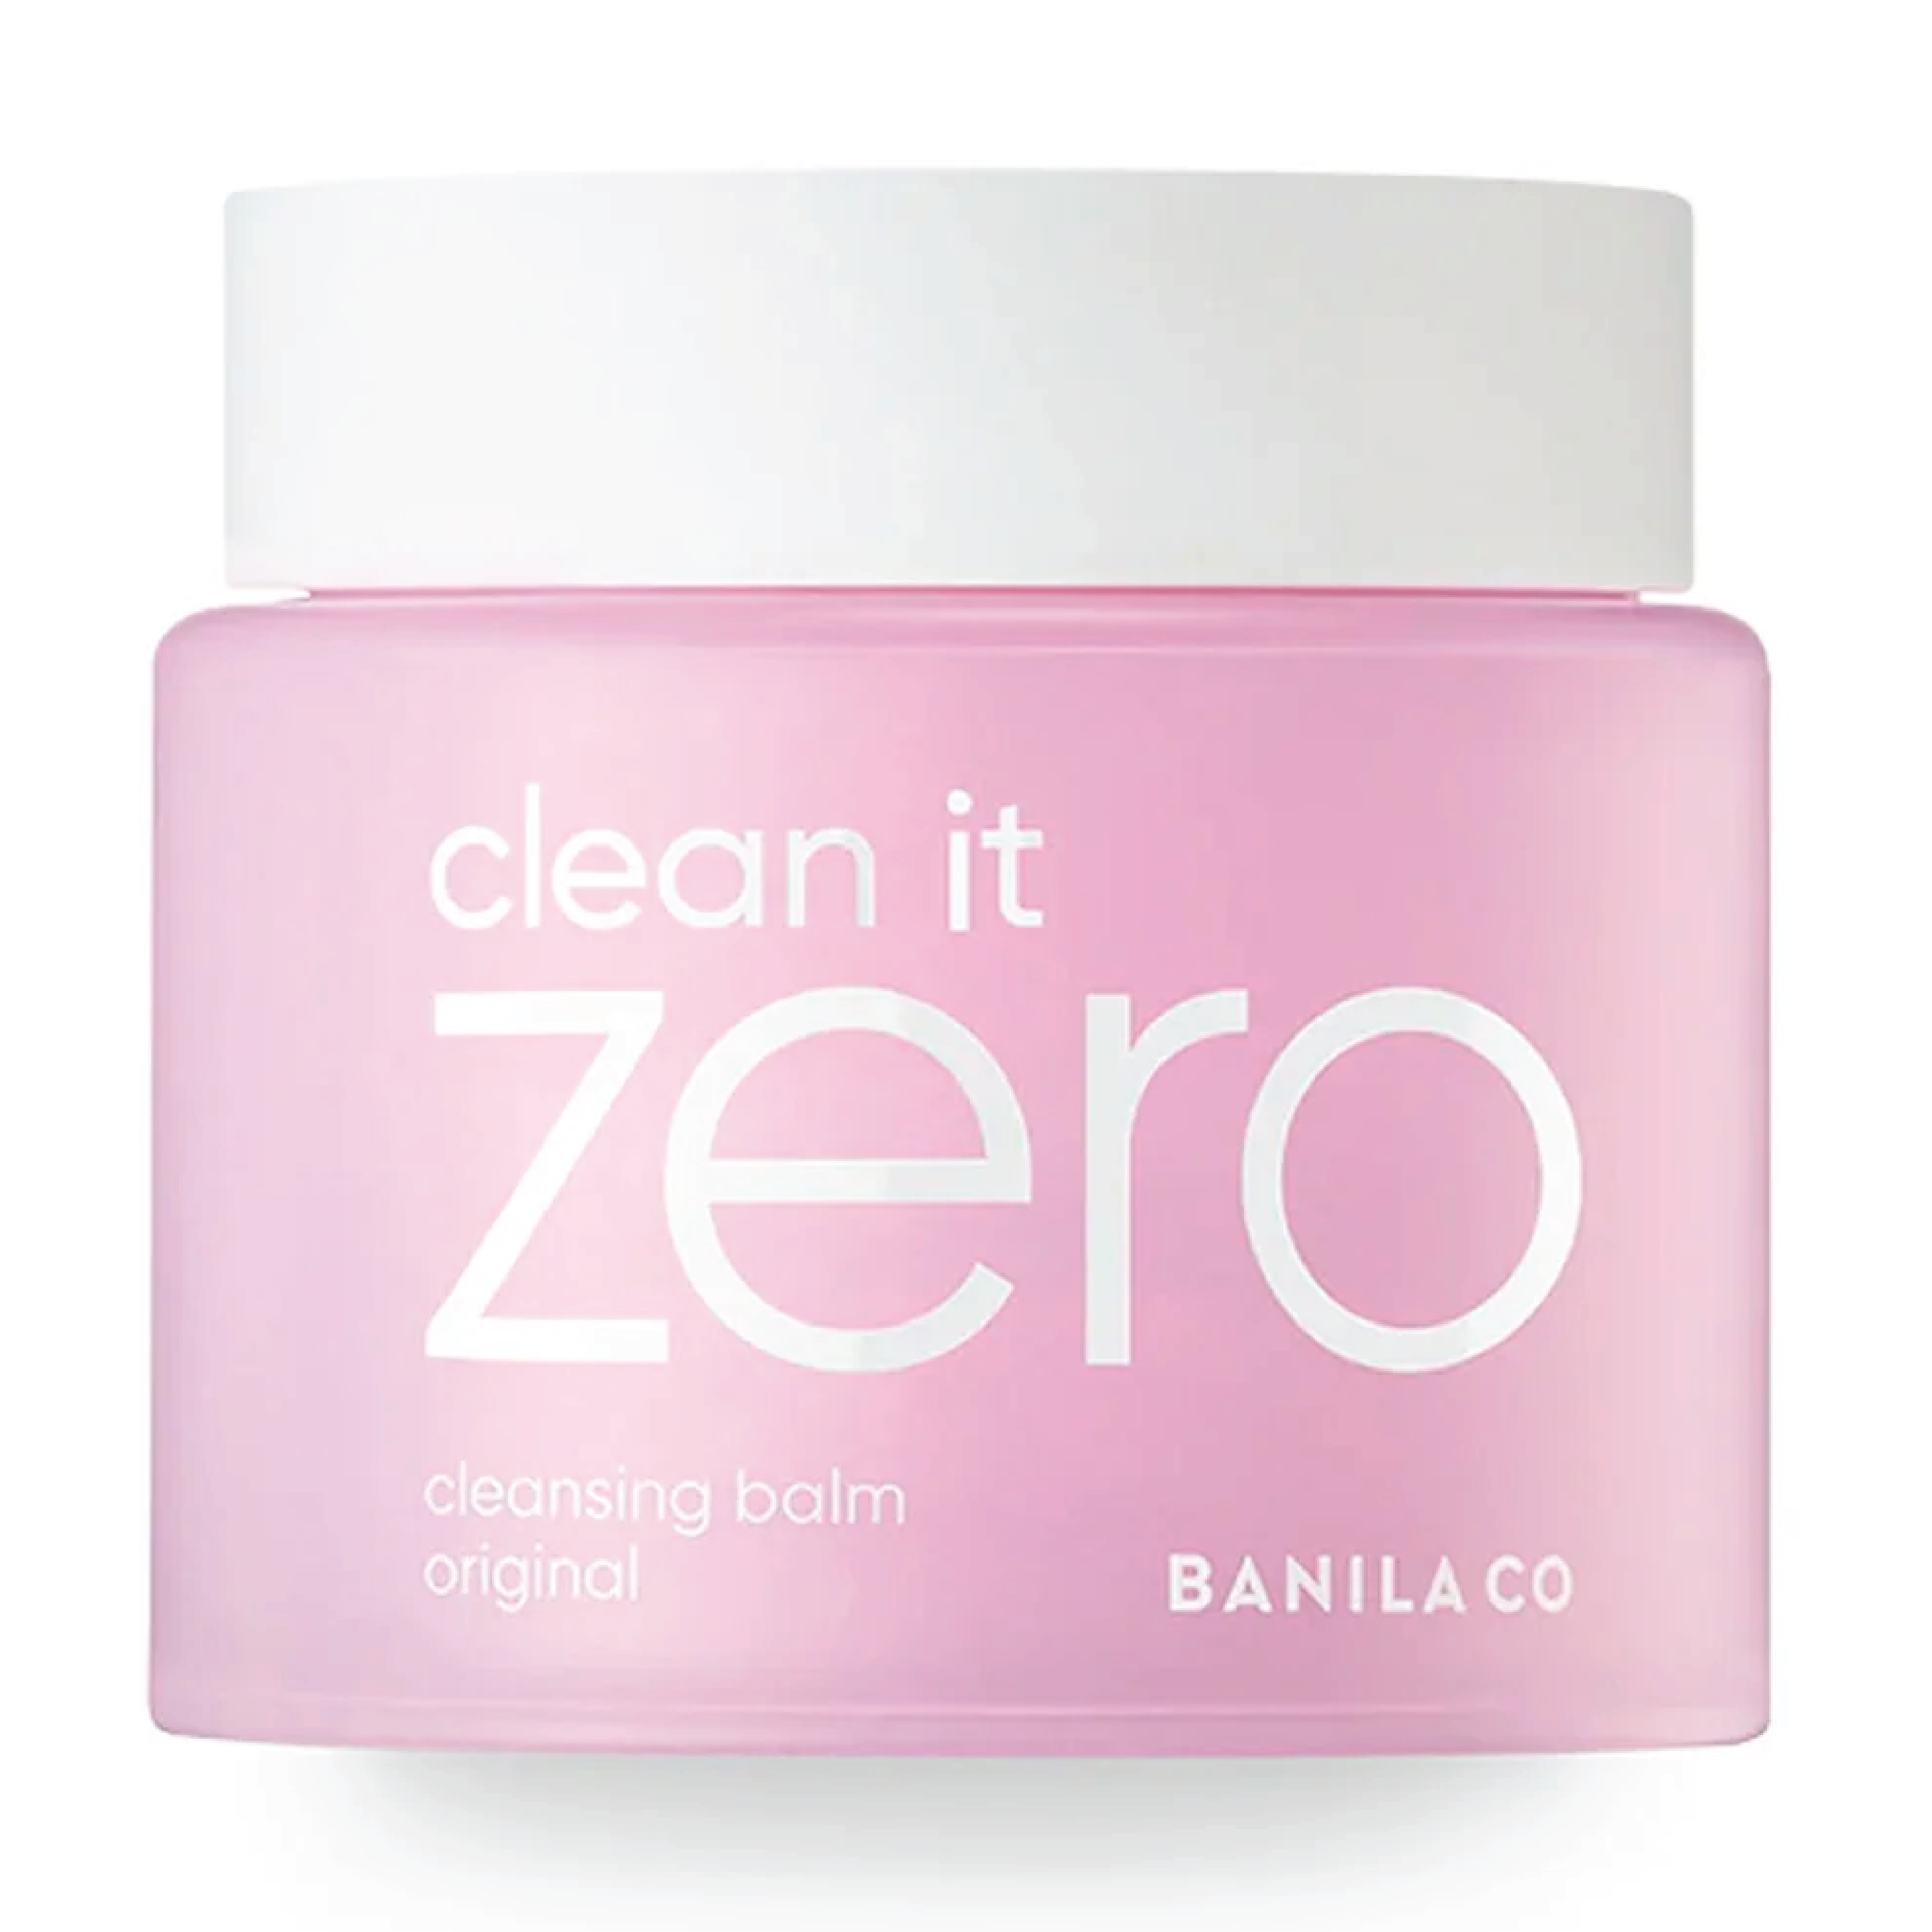 Banila Co Clean It Zero Cleansing Balm Original Jumbo Size, 180 ml